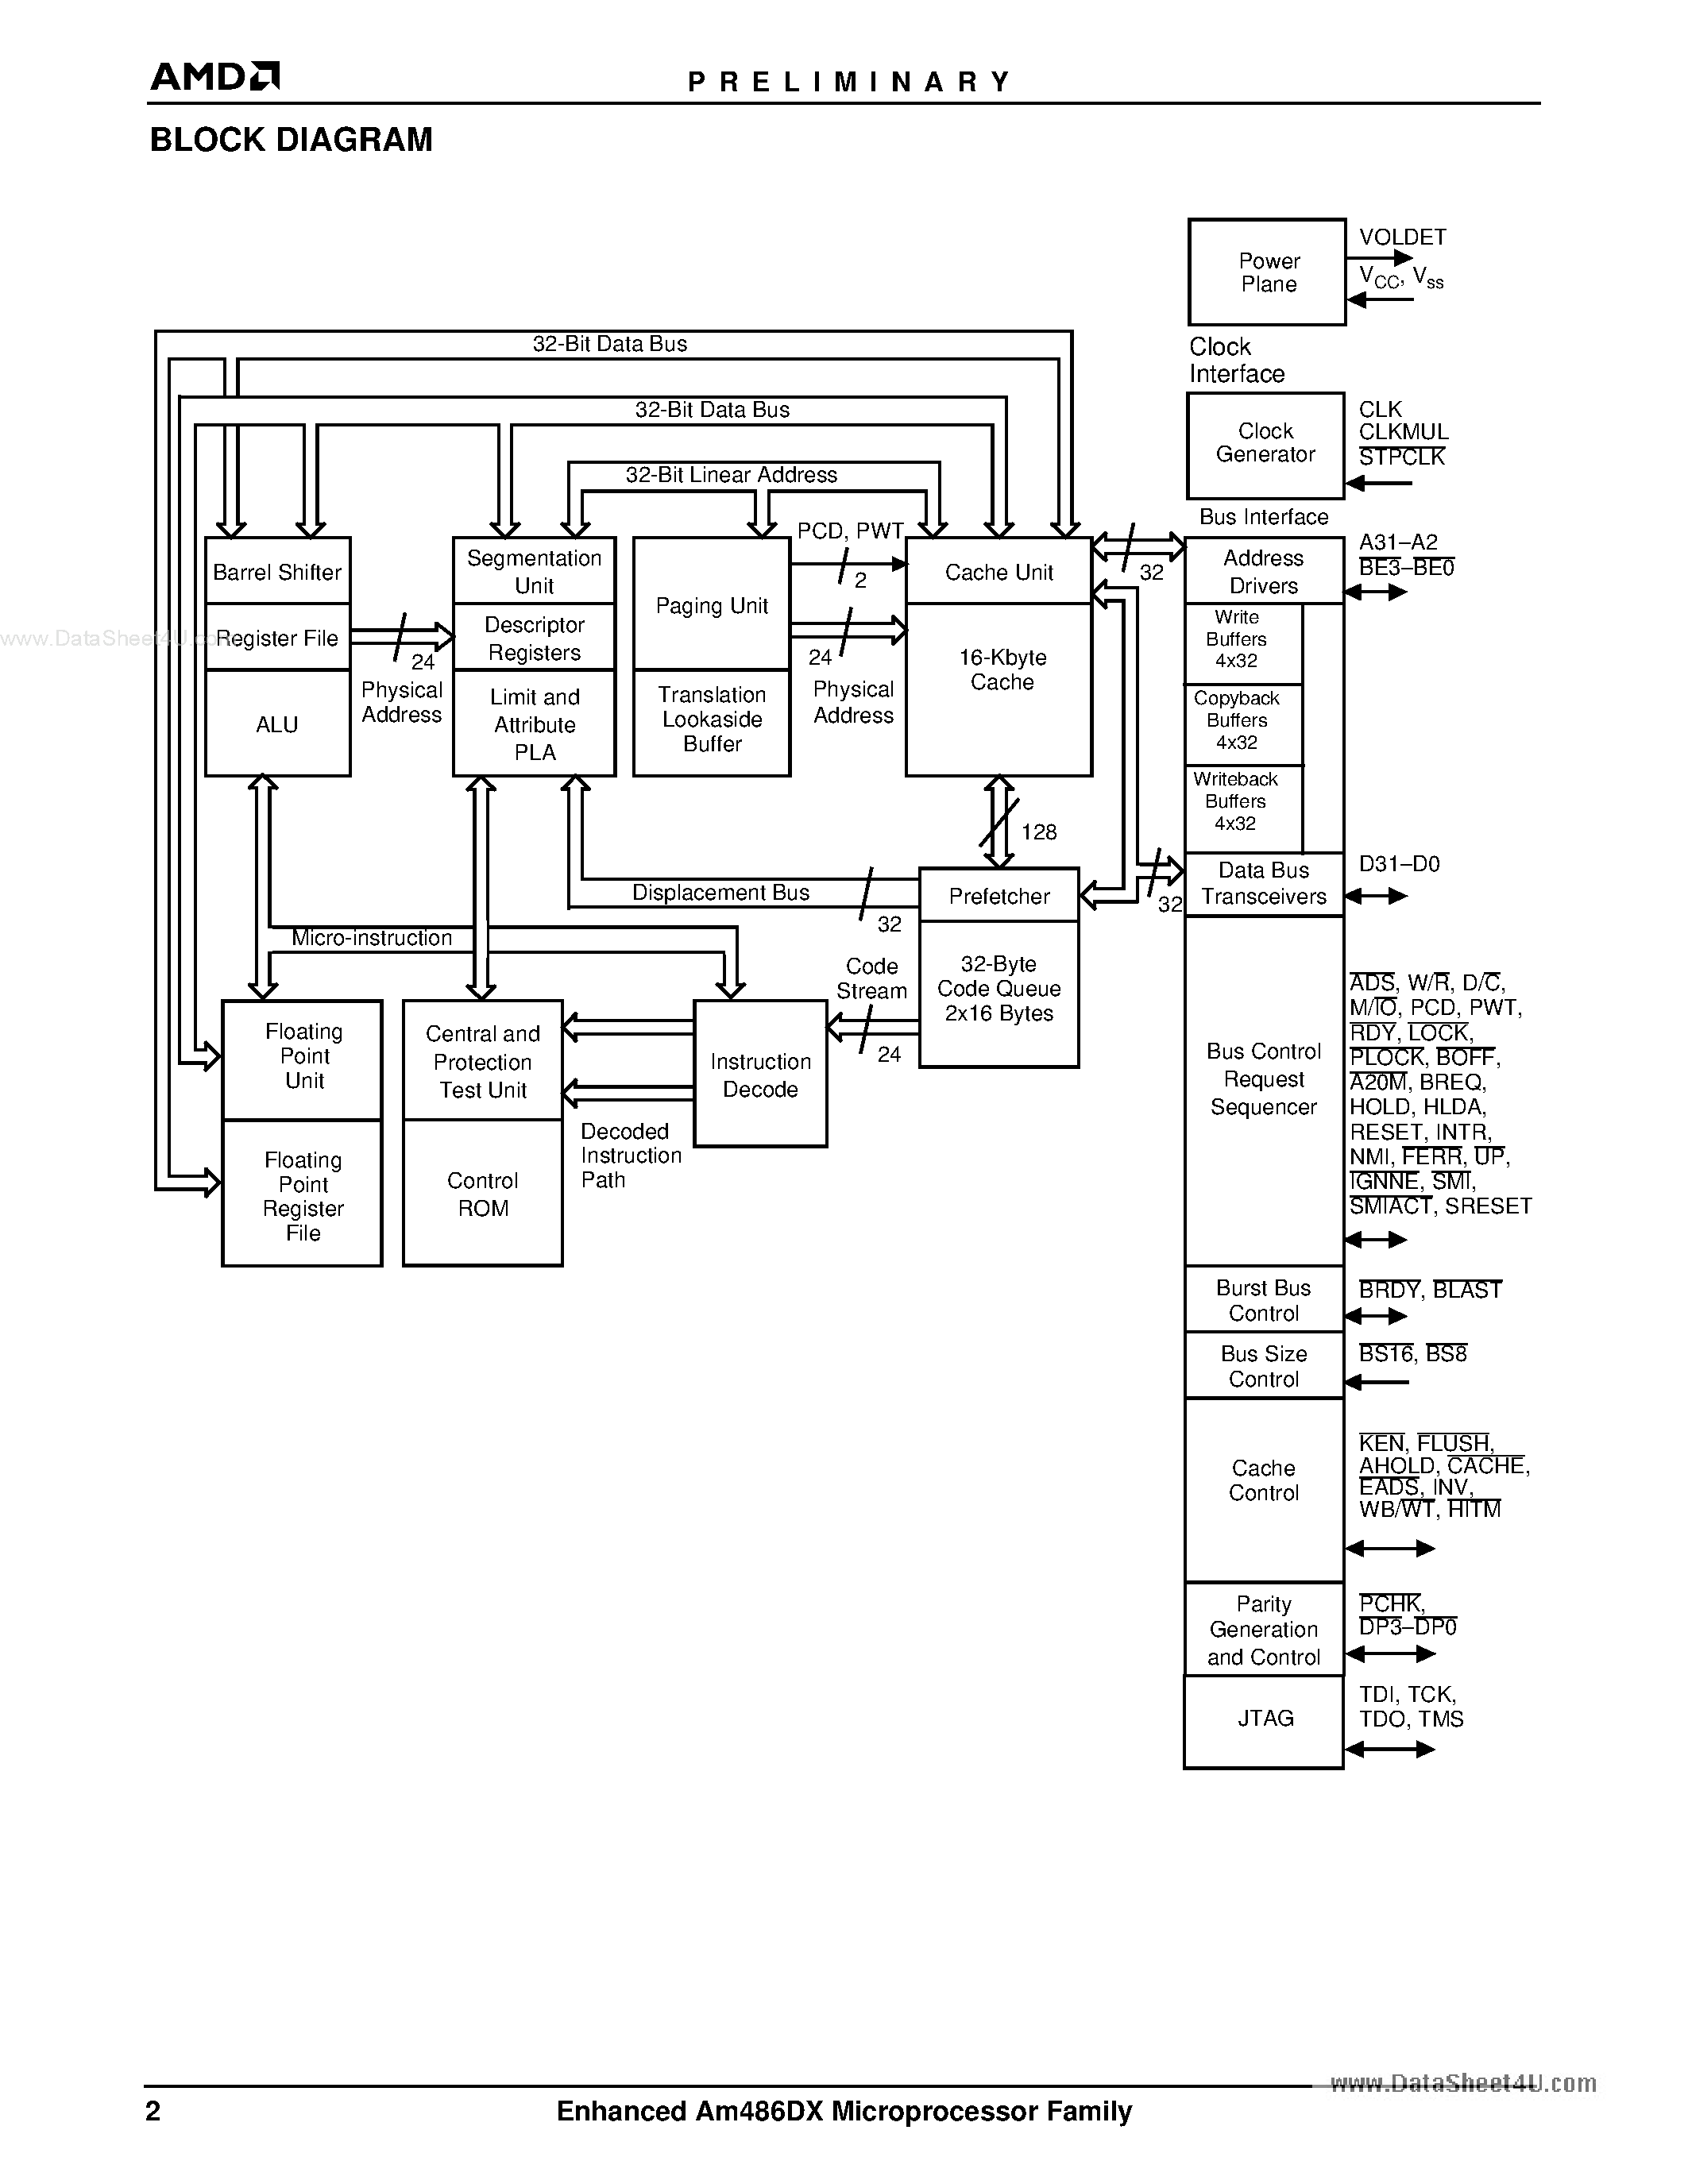 Даташит AM486DX5 - Microprocessor Family страница 2